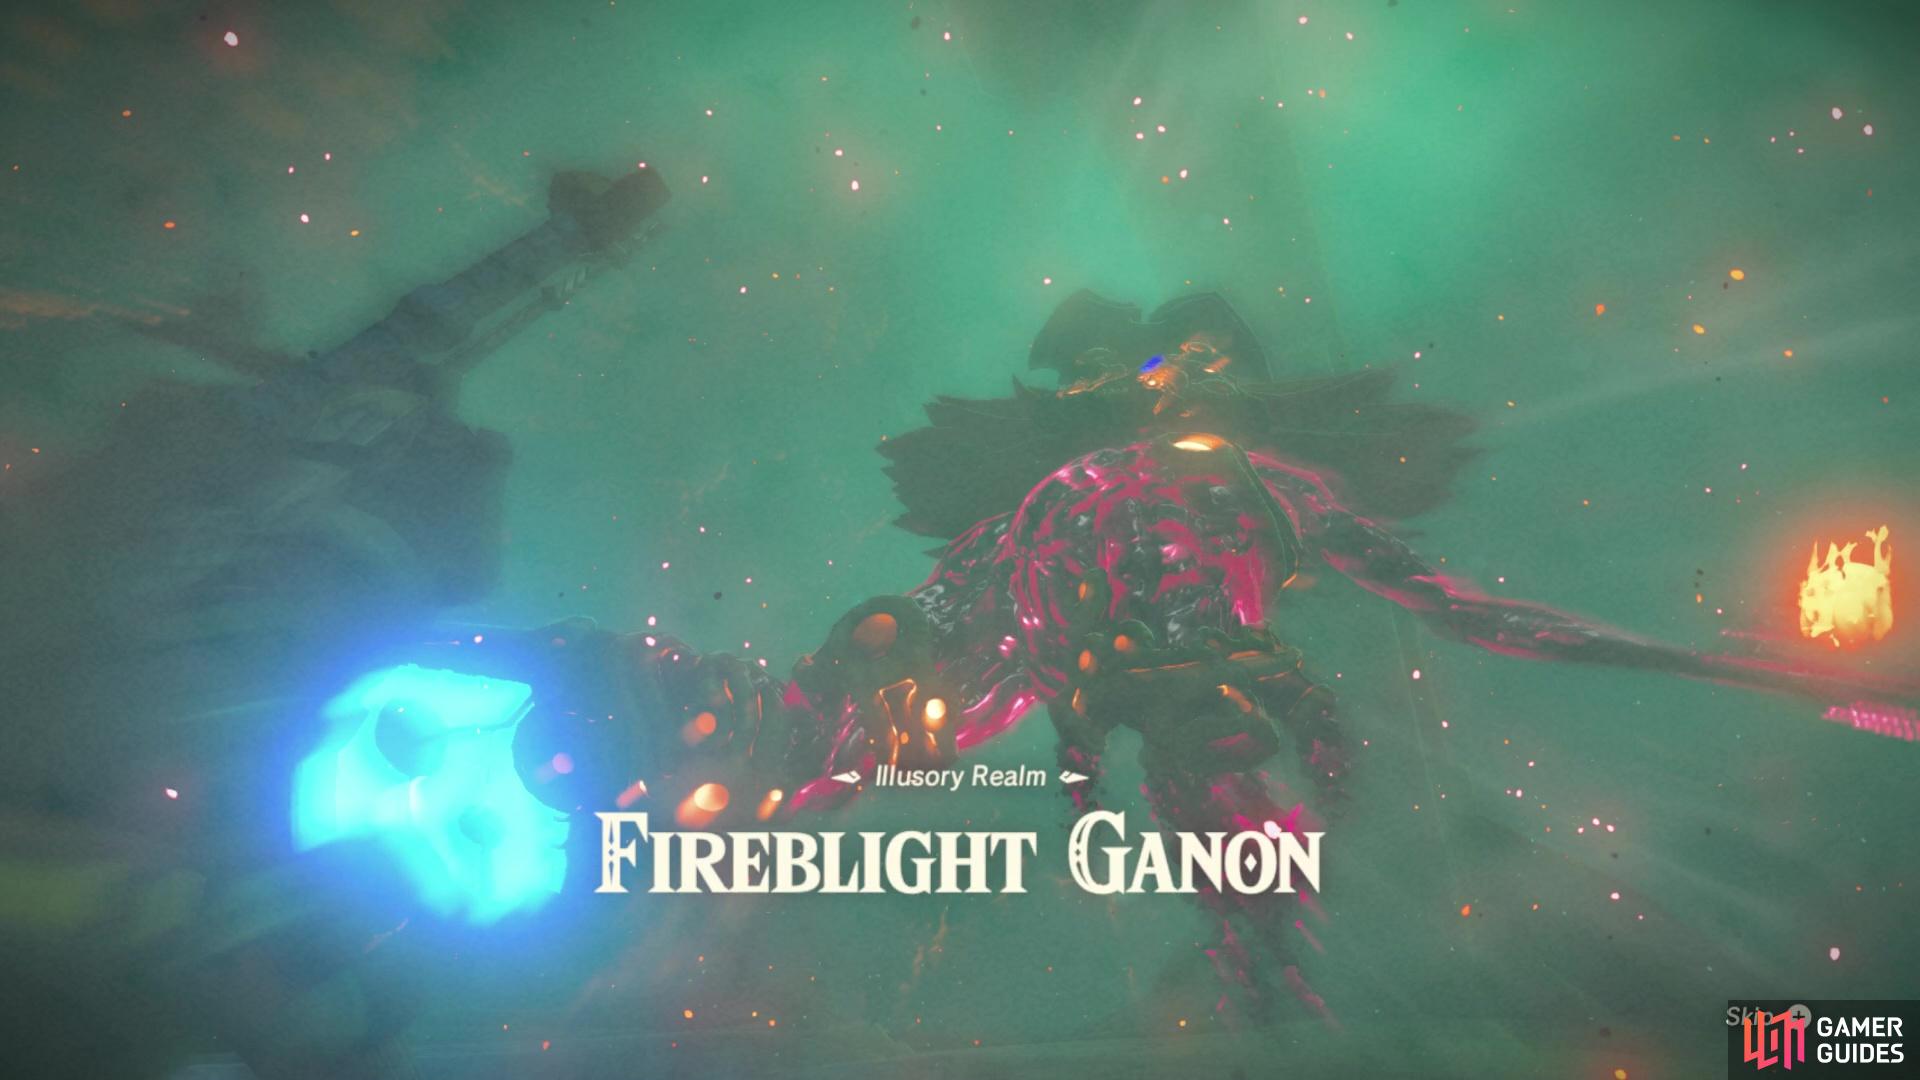 Welcome back Fireblight Ganon!